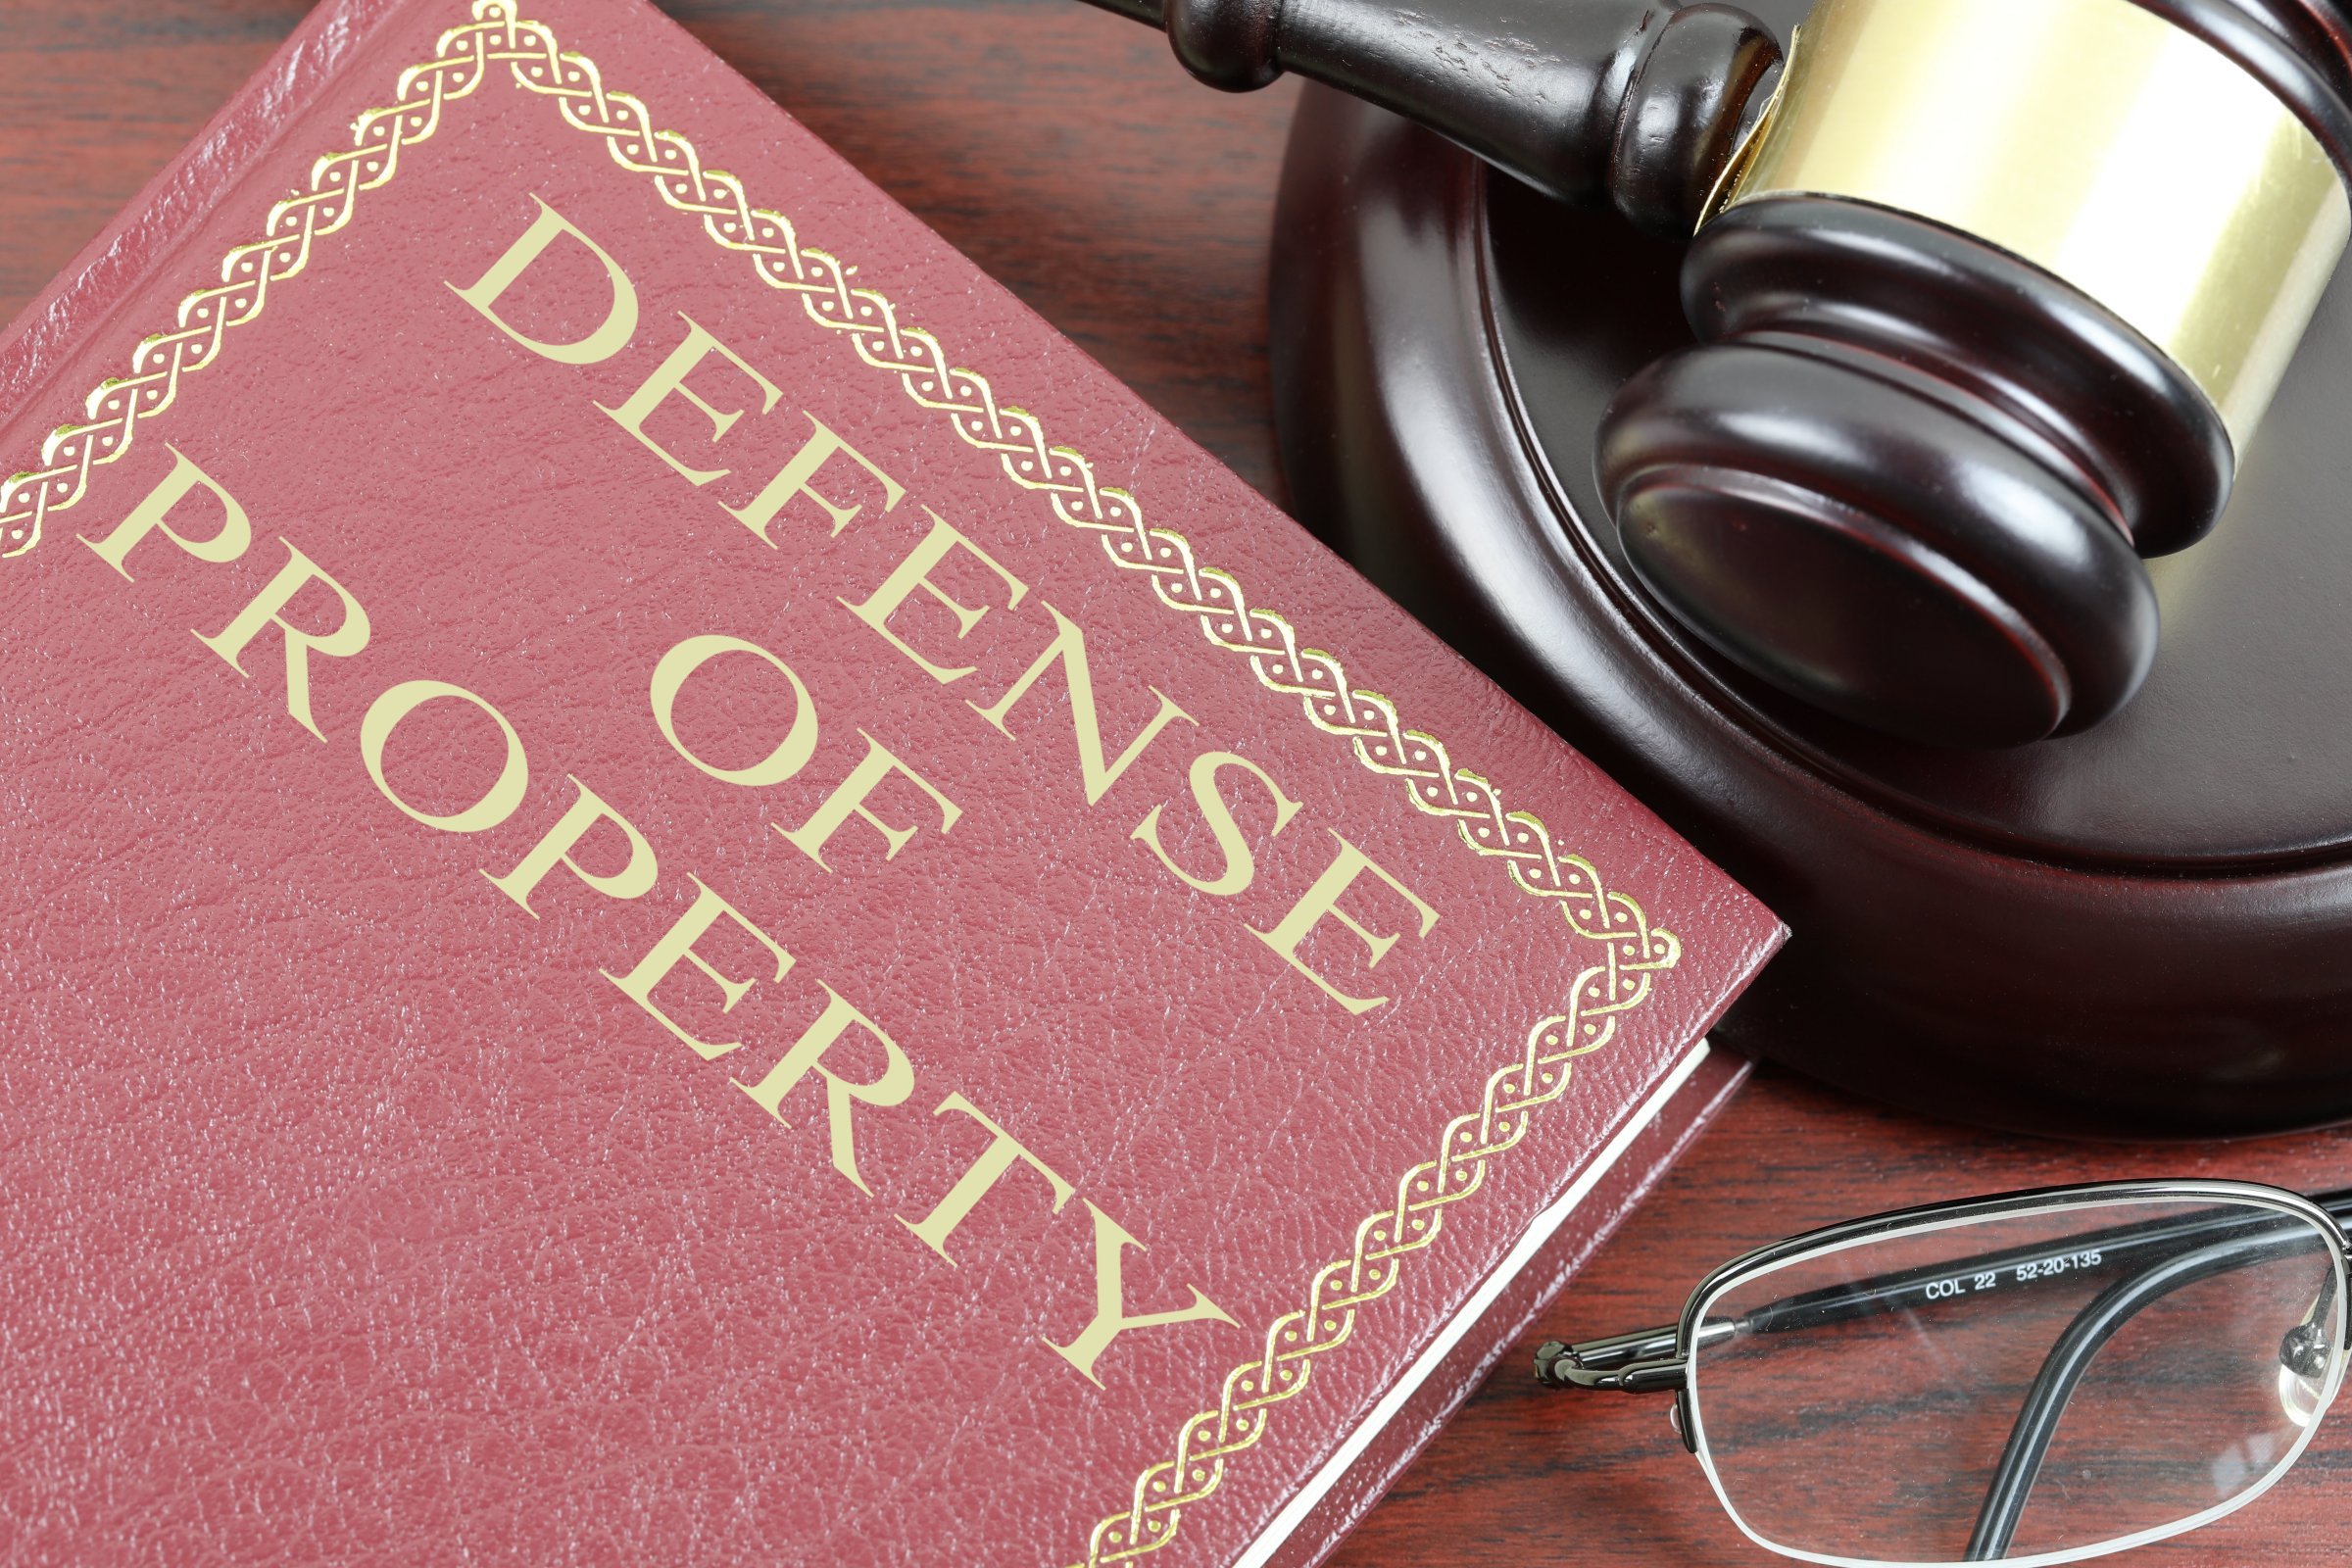 defense of property